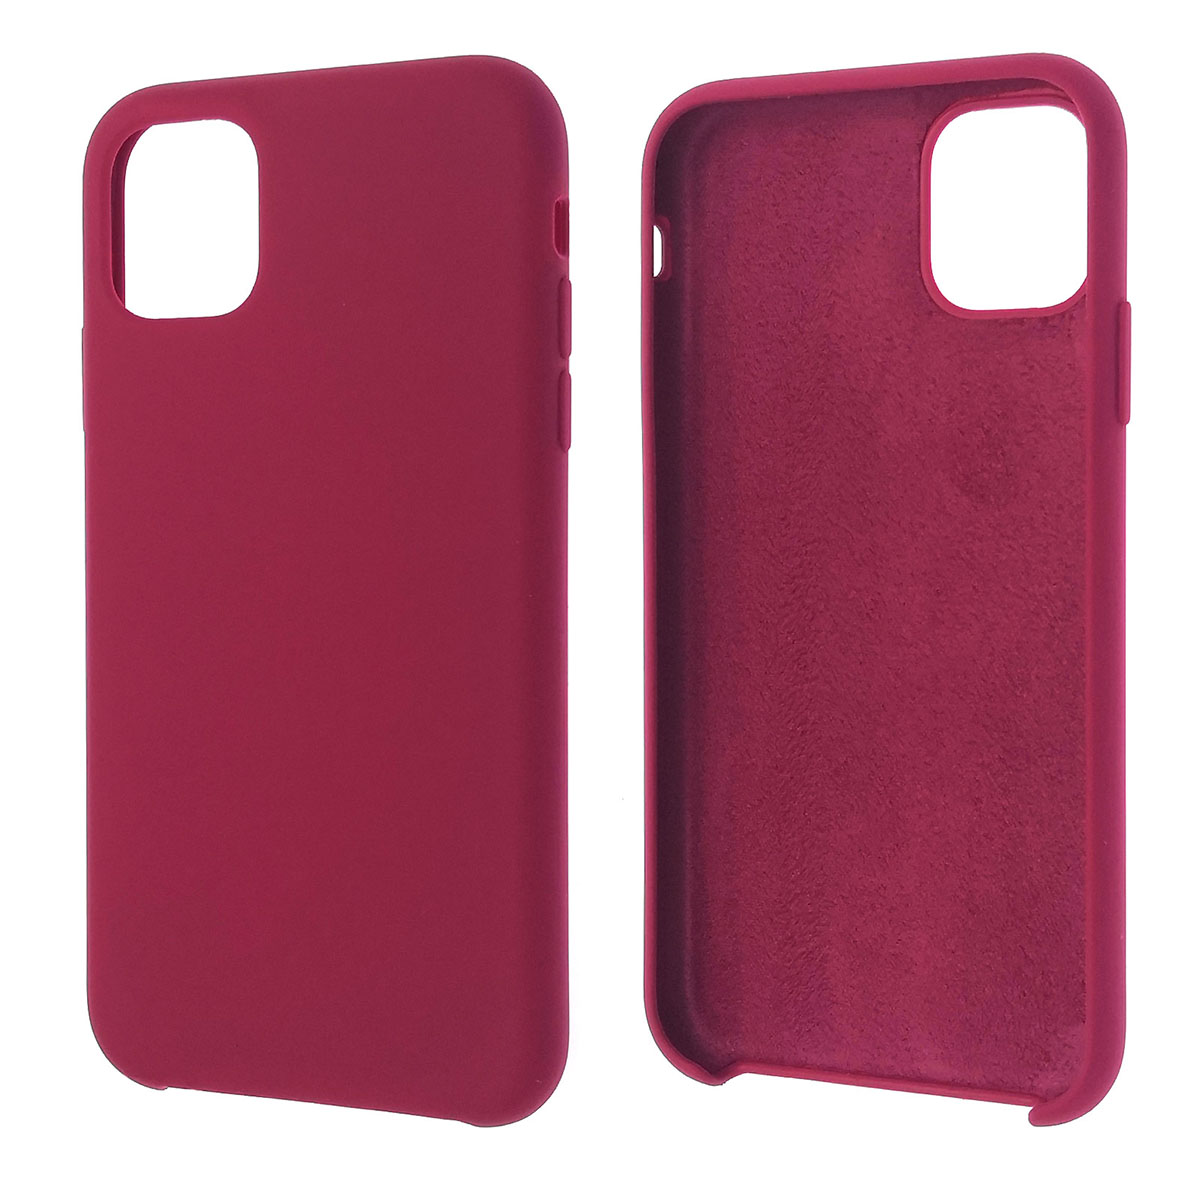 Чехол накладка Silicon Case для APPLE iPhone 11, силикон, бархат, цвет бордовый